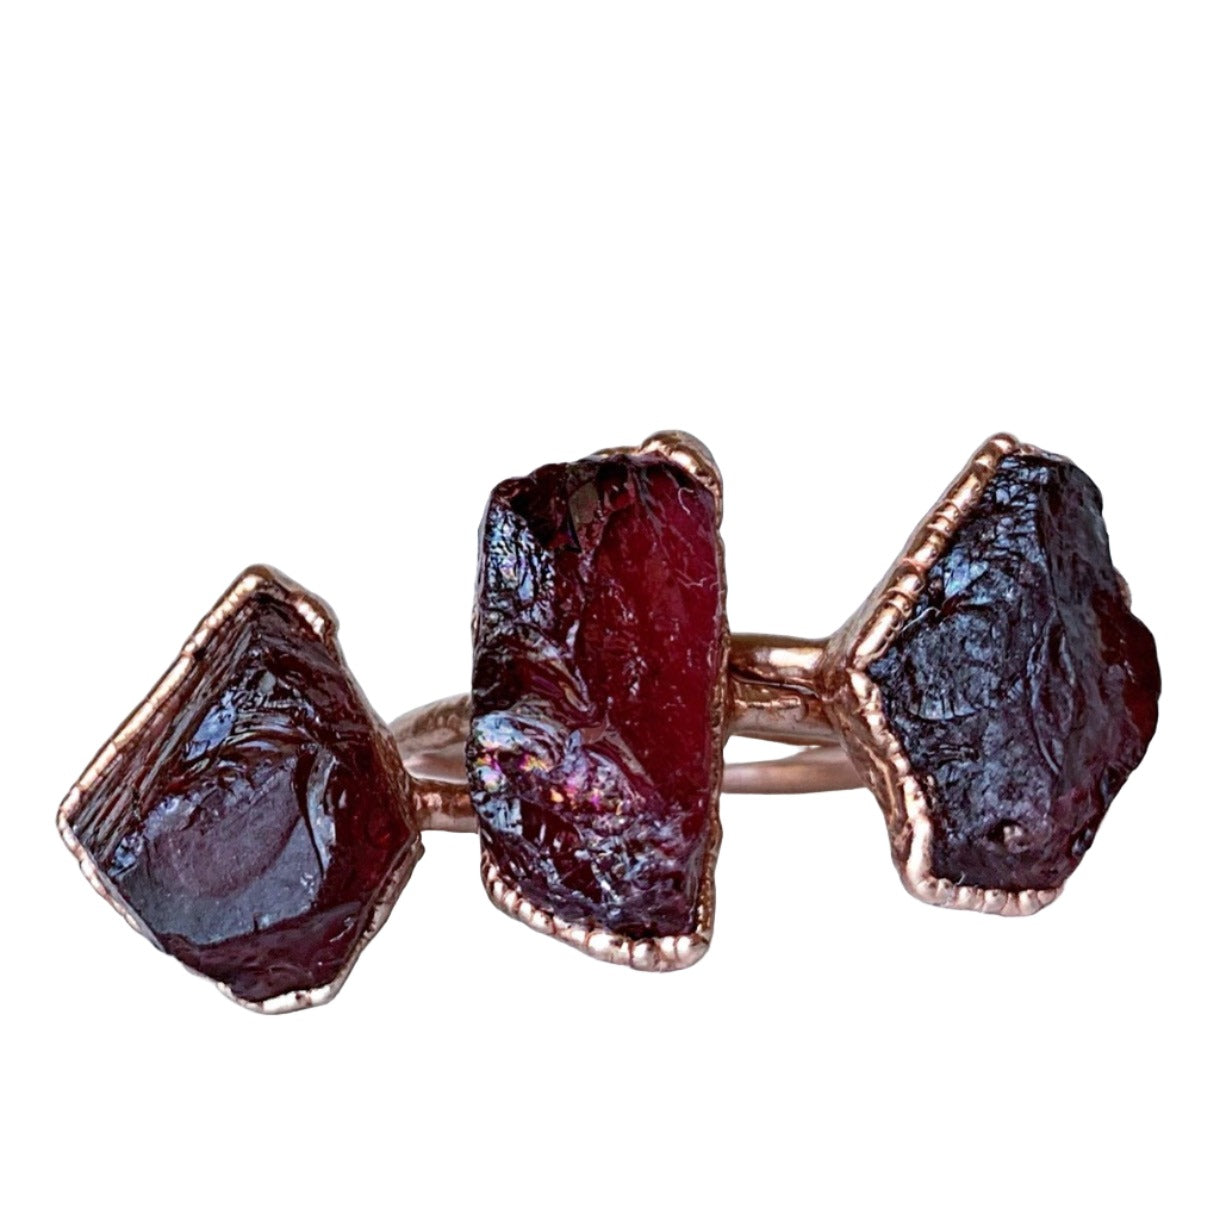 Crystal Rings | Shop Natural Healing Garnet Chips Stone Rings